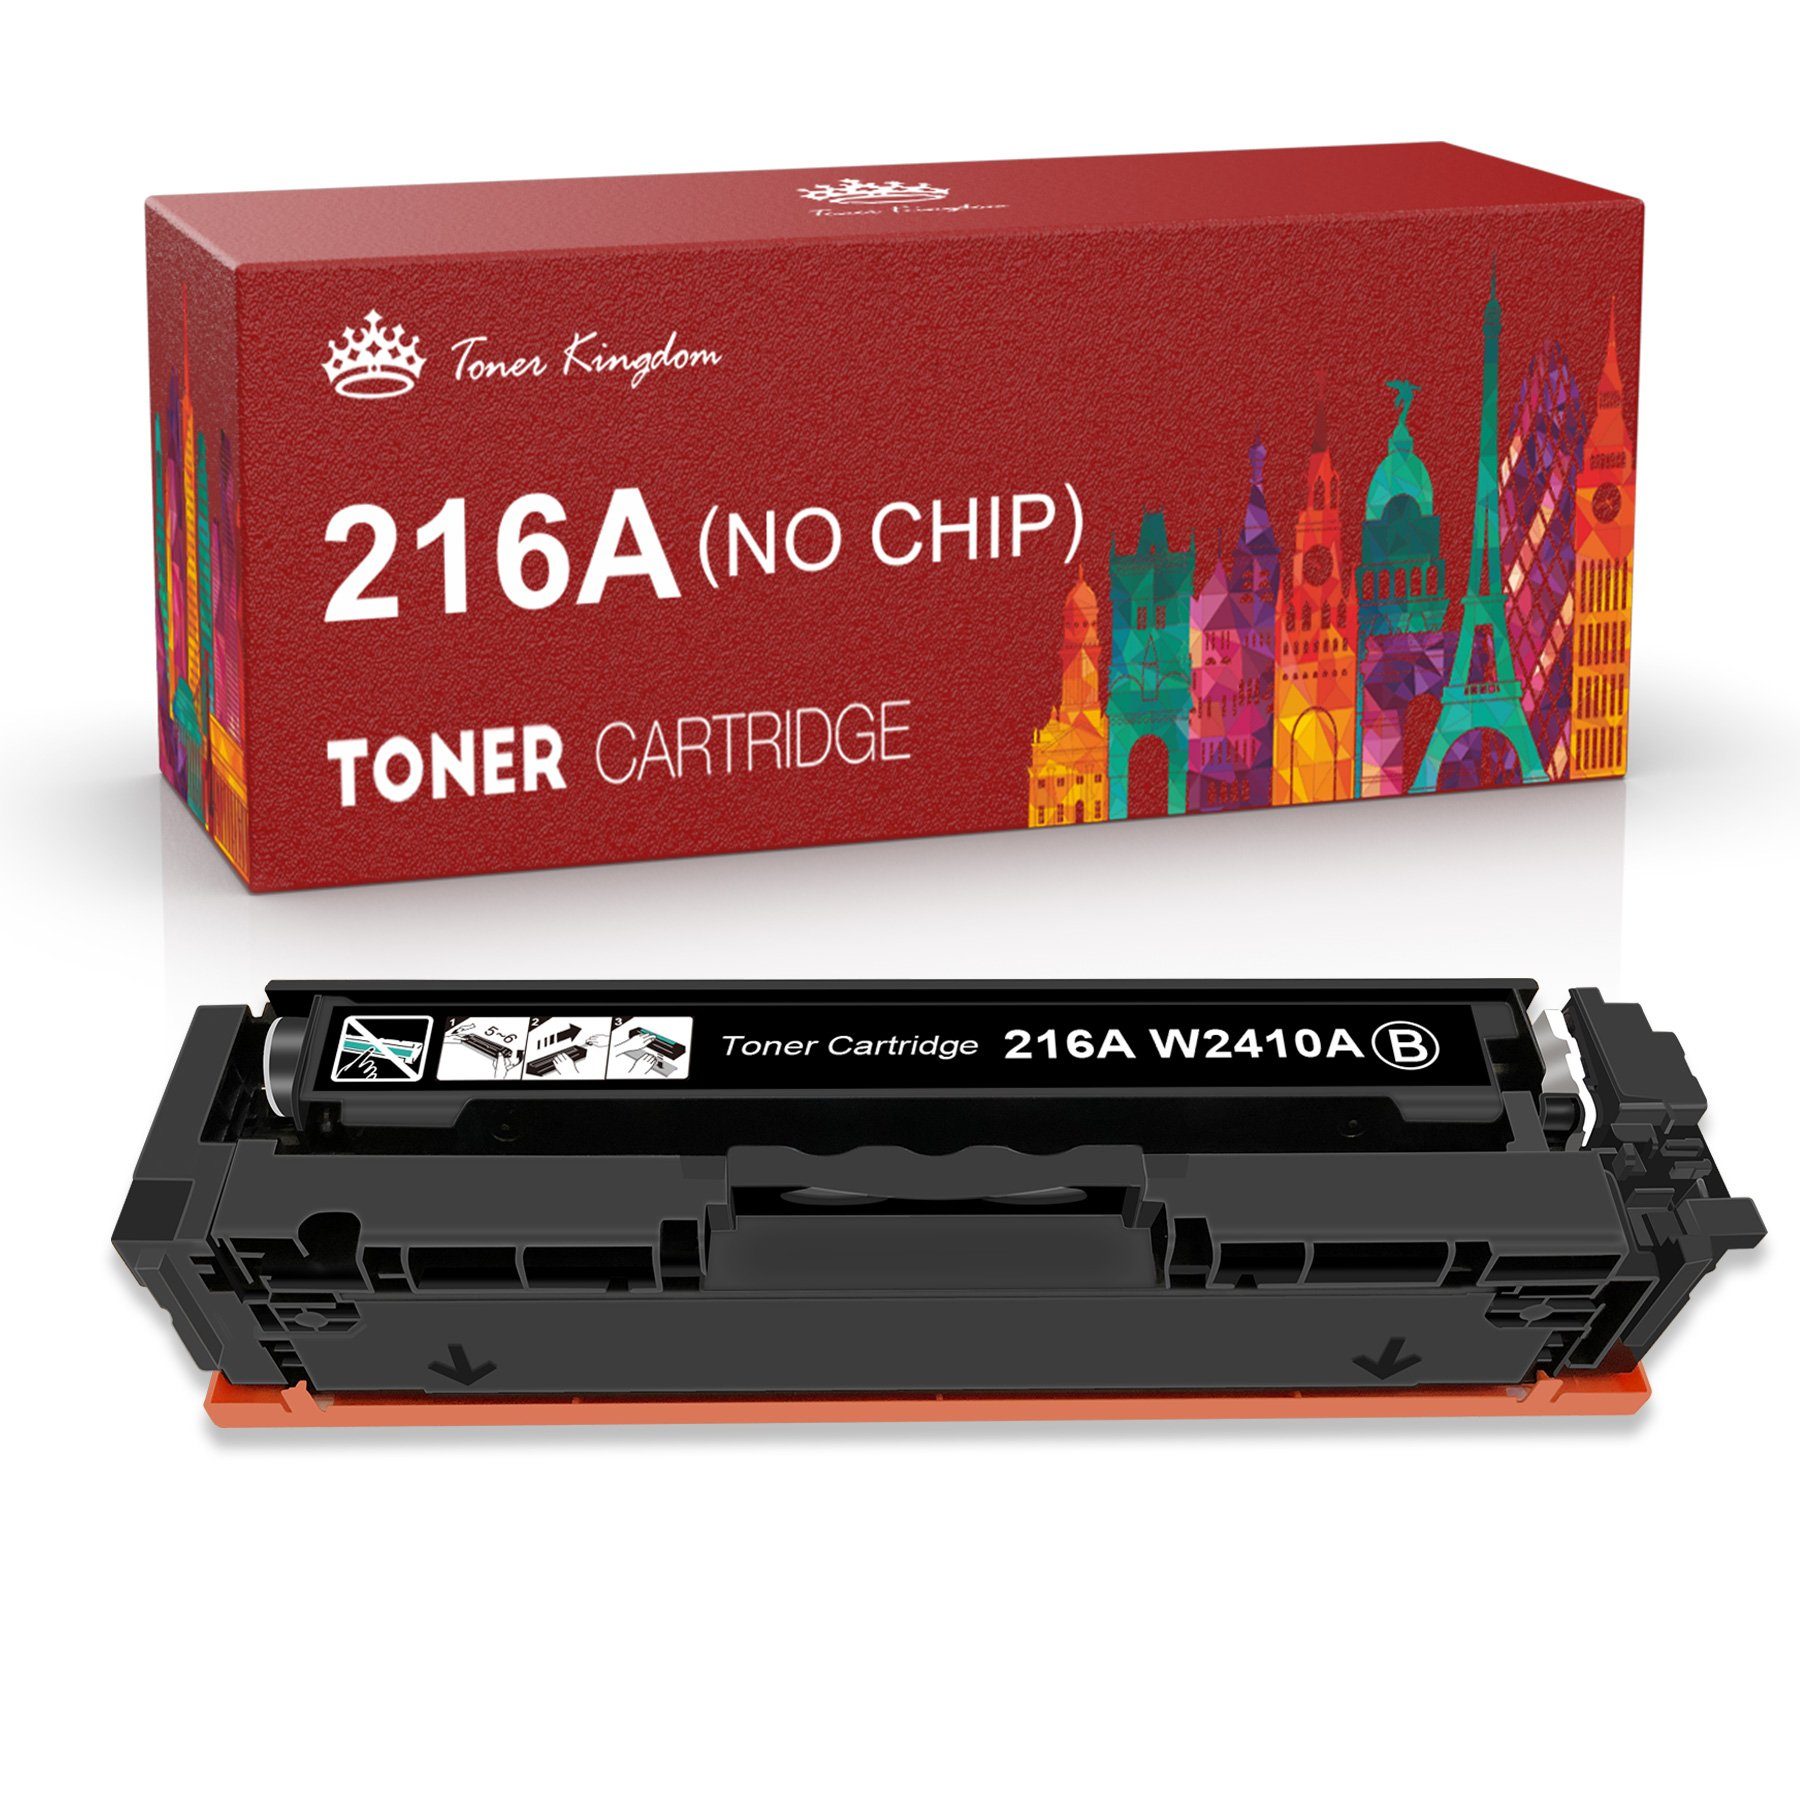 Toner Kingdom Tonerpatrone für HP 216A Ersatz 216 A HP216A HP216 Color Schwarz